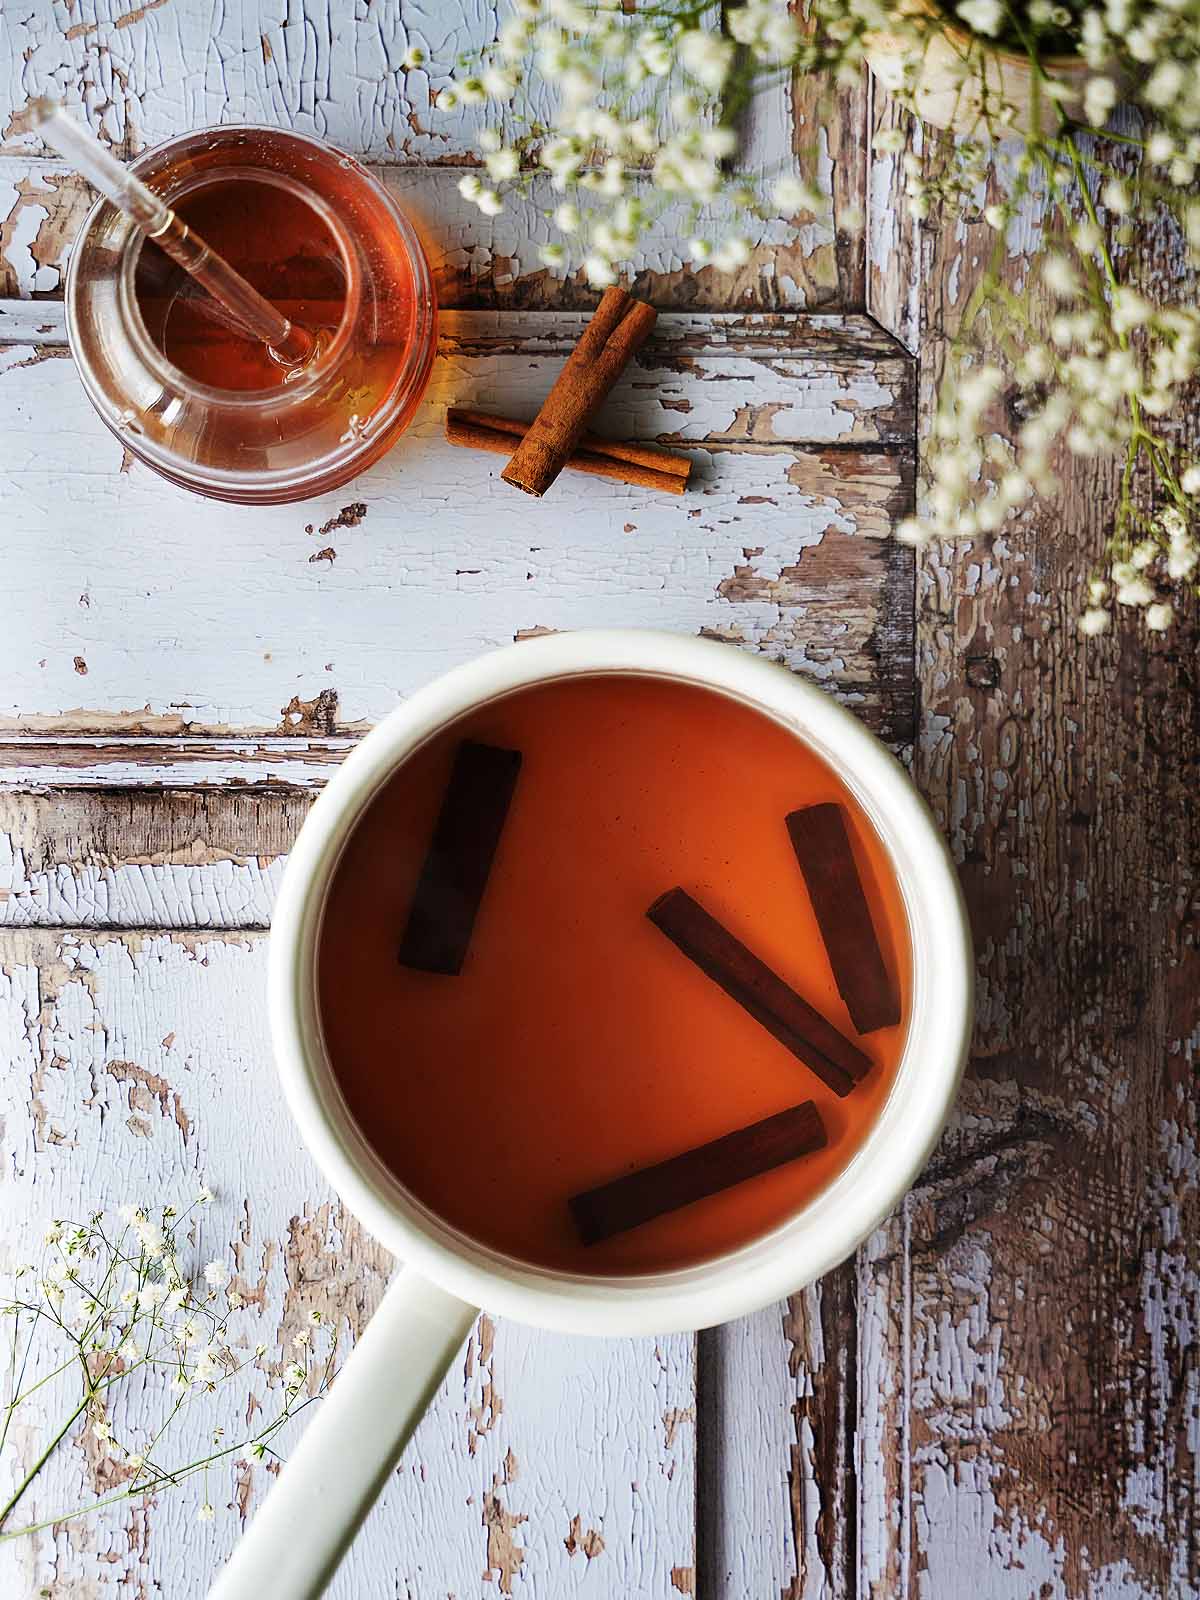 Cinnamon tea brewing in a saucepot.